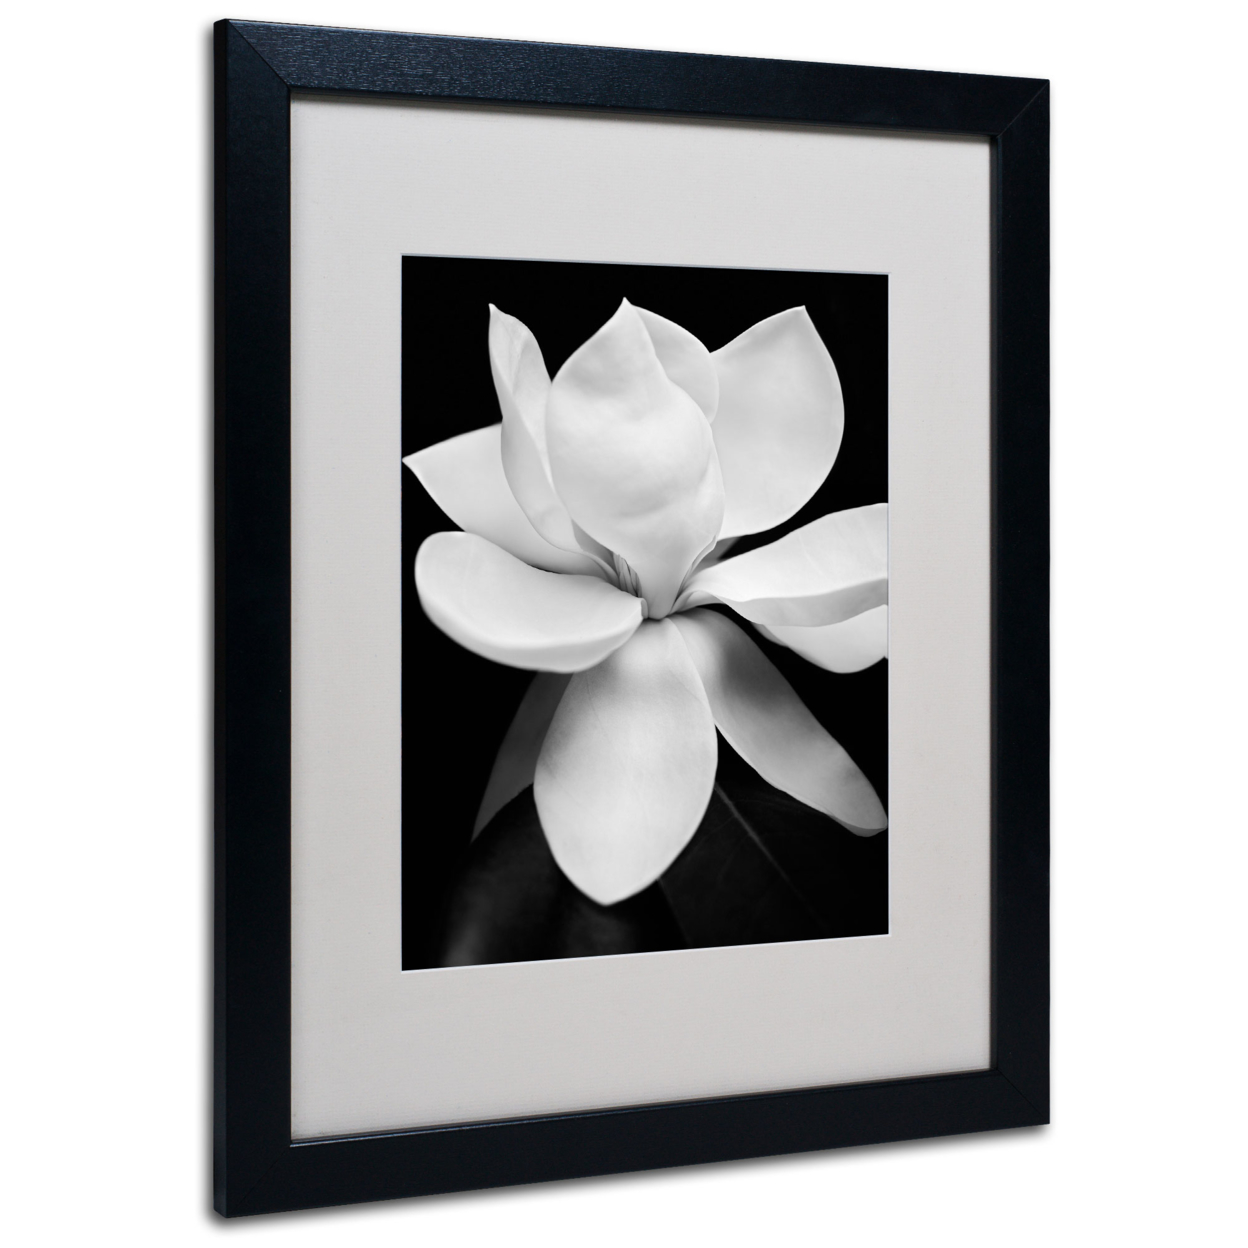 Michael Harrison 'Magnolia' Black Wooden Framed Art 18 X 22 Inches